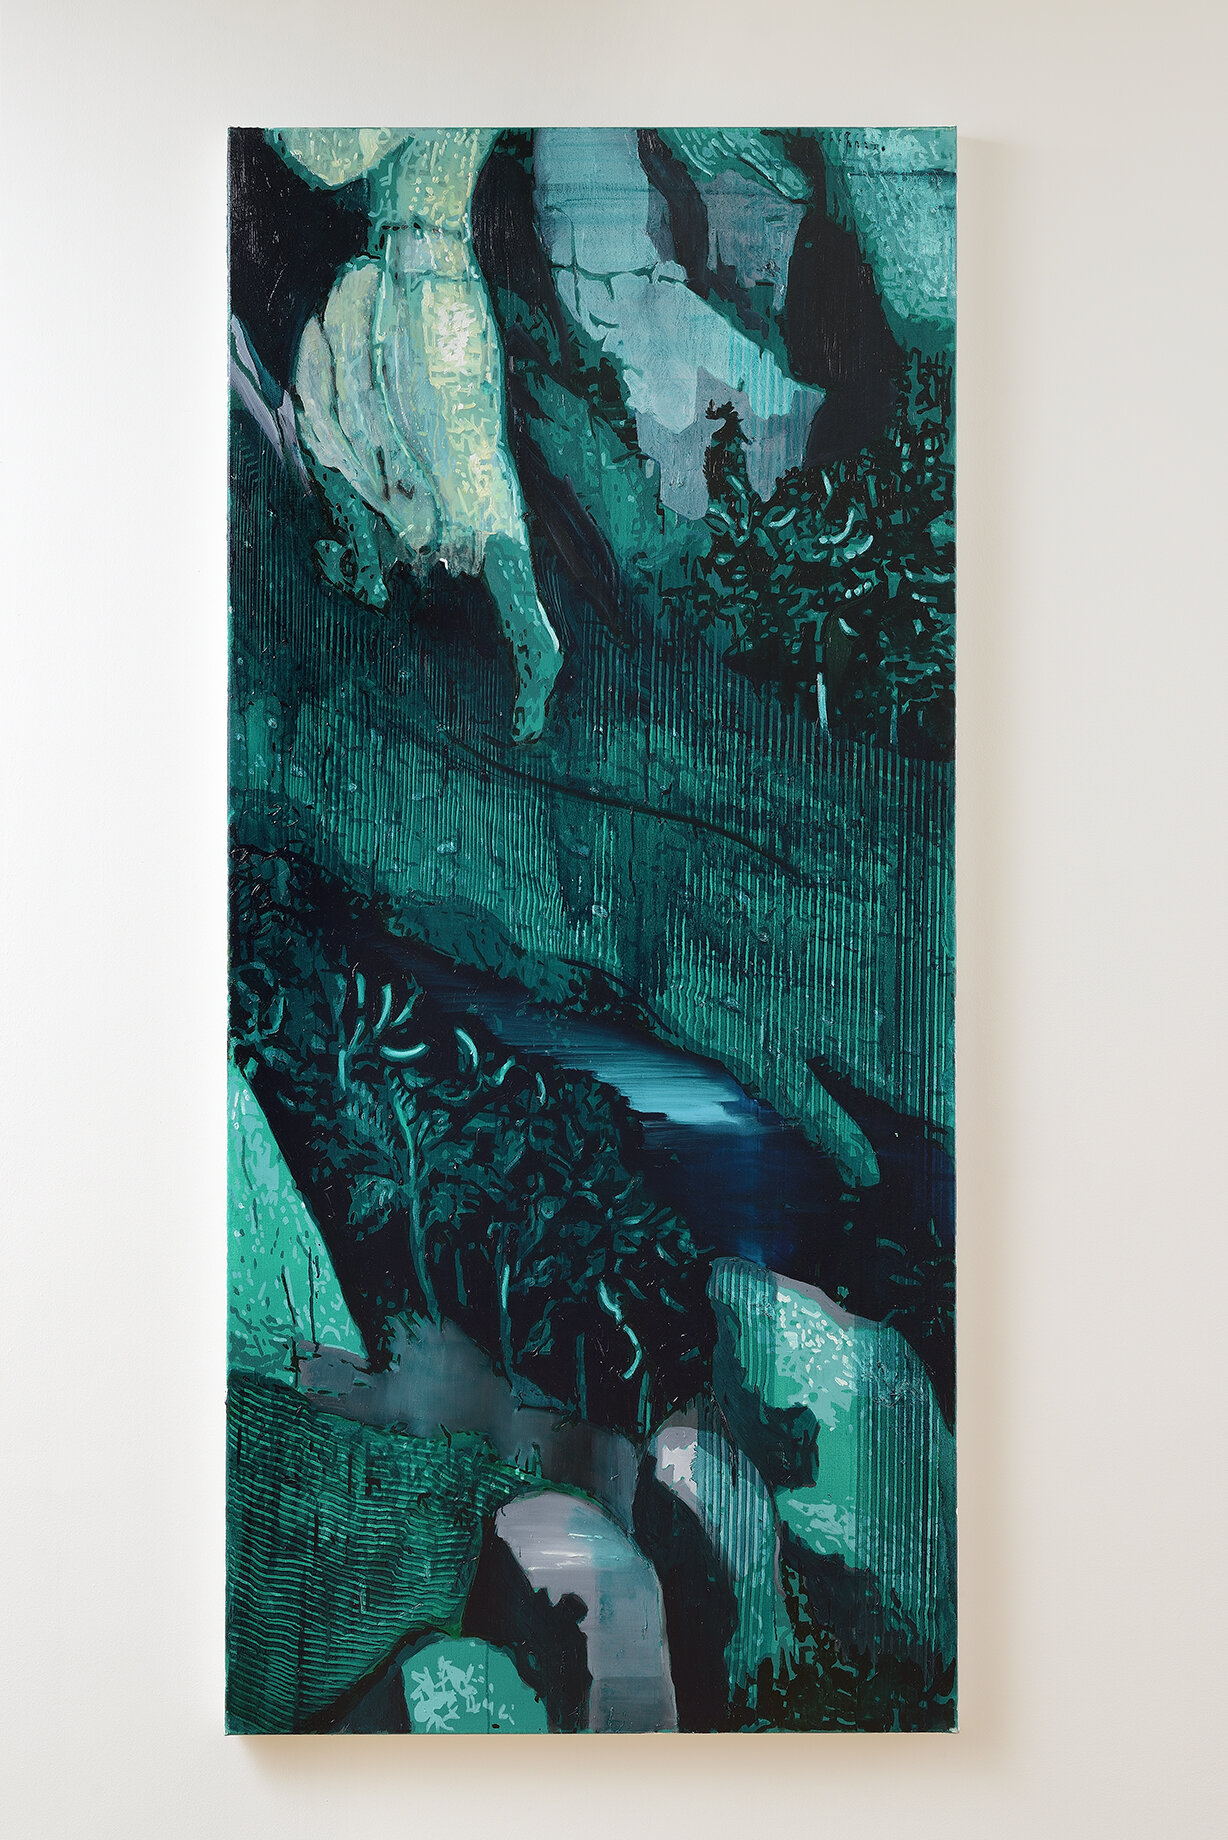   slope V  , (2020), oil on canvas,200x90 cm     